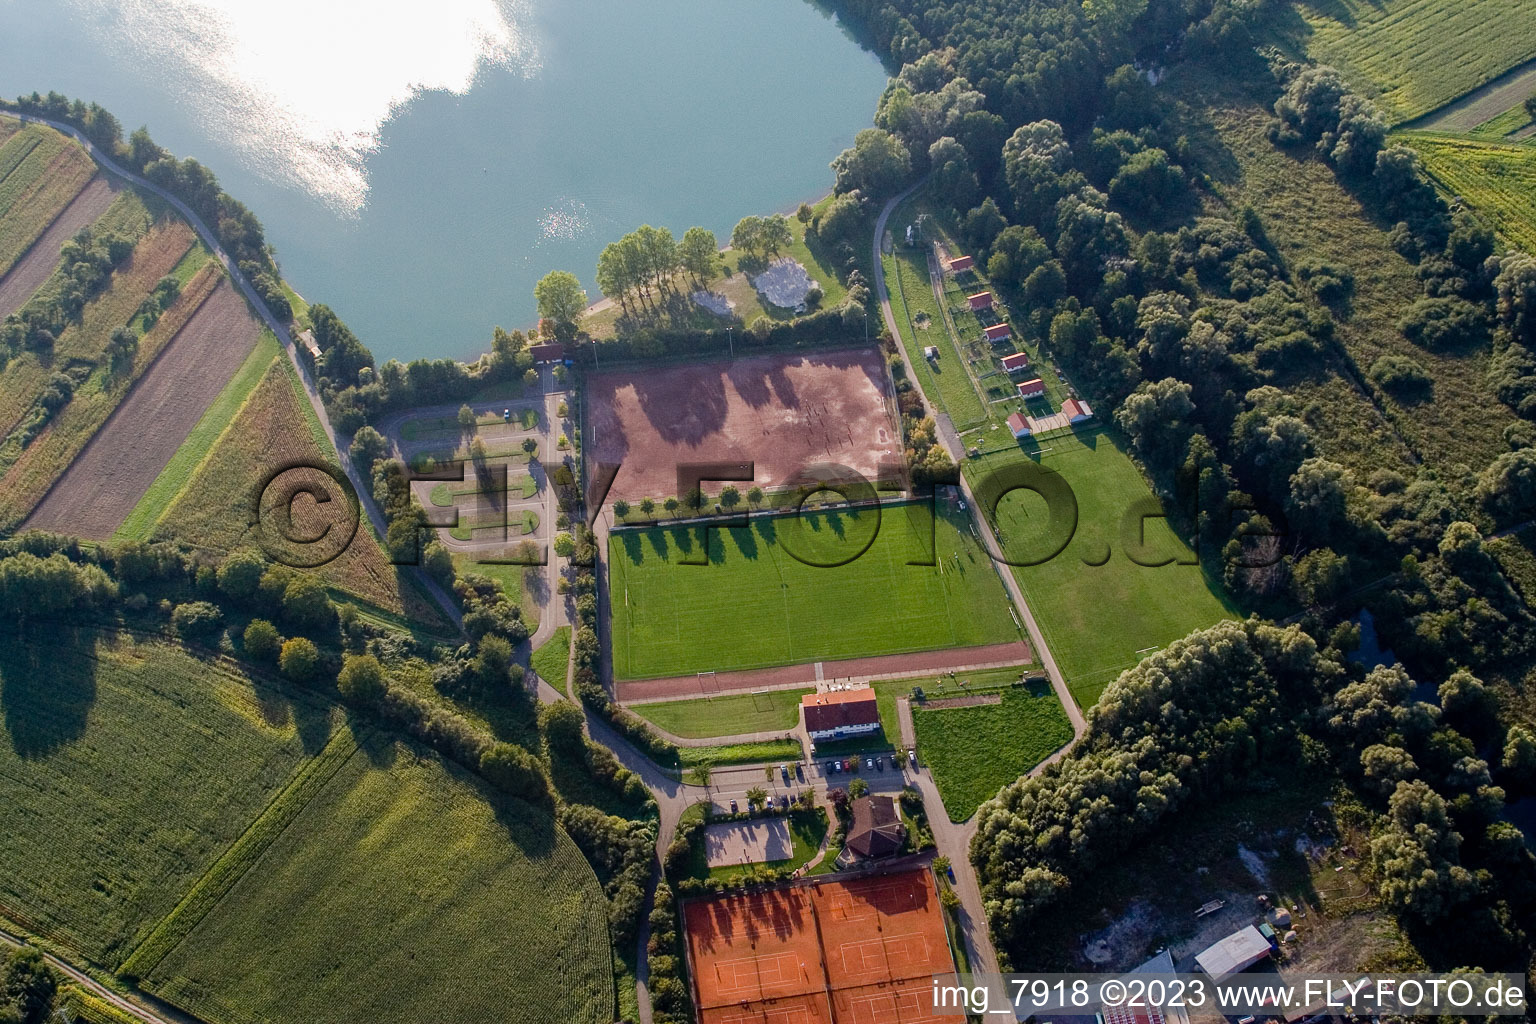 Sports fields in Neuburg in the state Rhineland-Palatinate, Germany